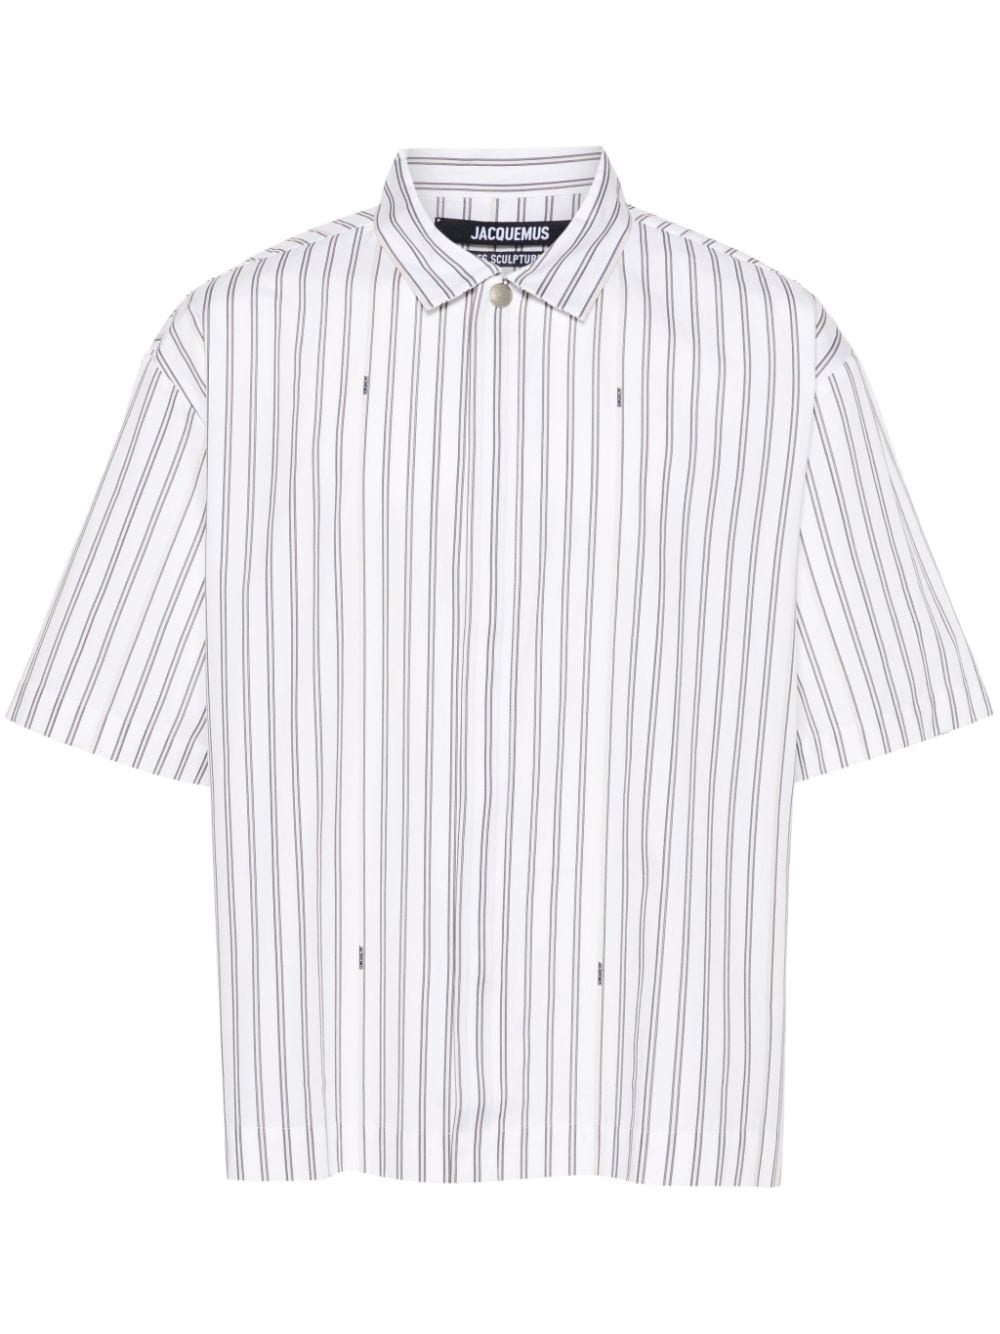 Jacquemus striped cotton shirt - White von Jacquemus